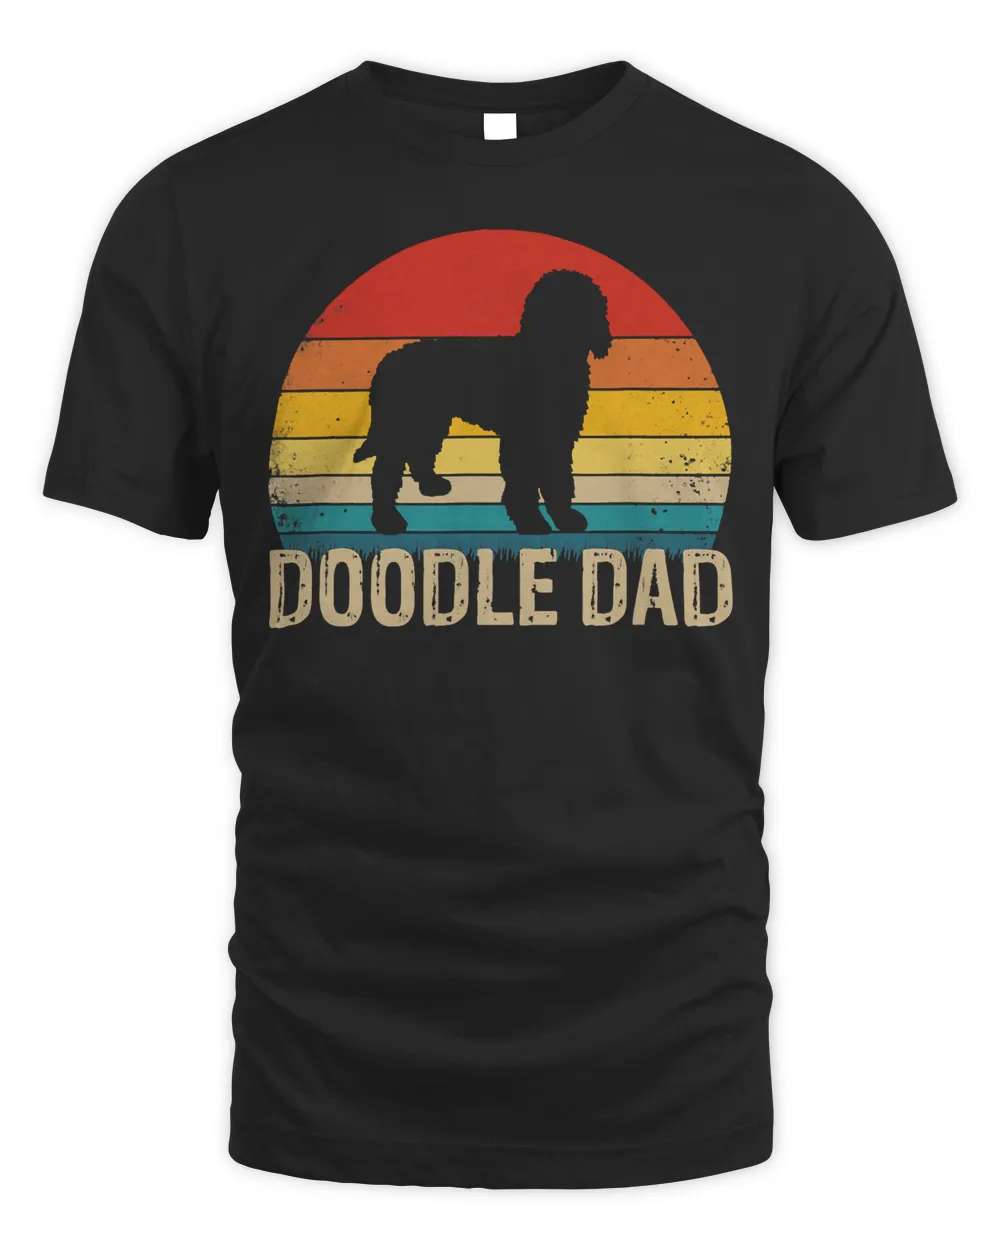 Vintage Retro Goldendoodle T-Shirt - Doodle Dad